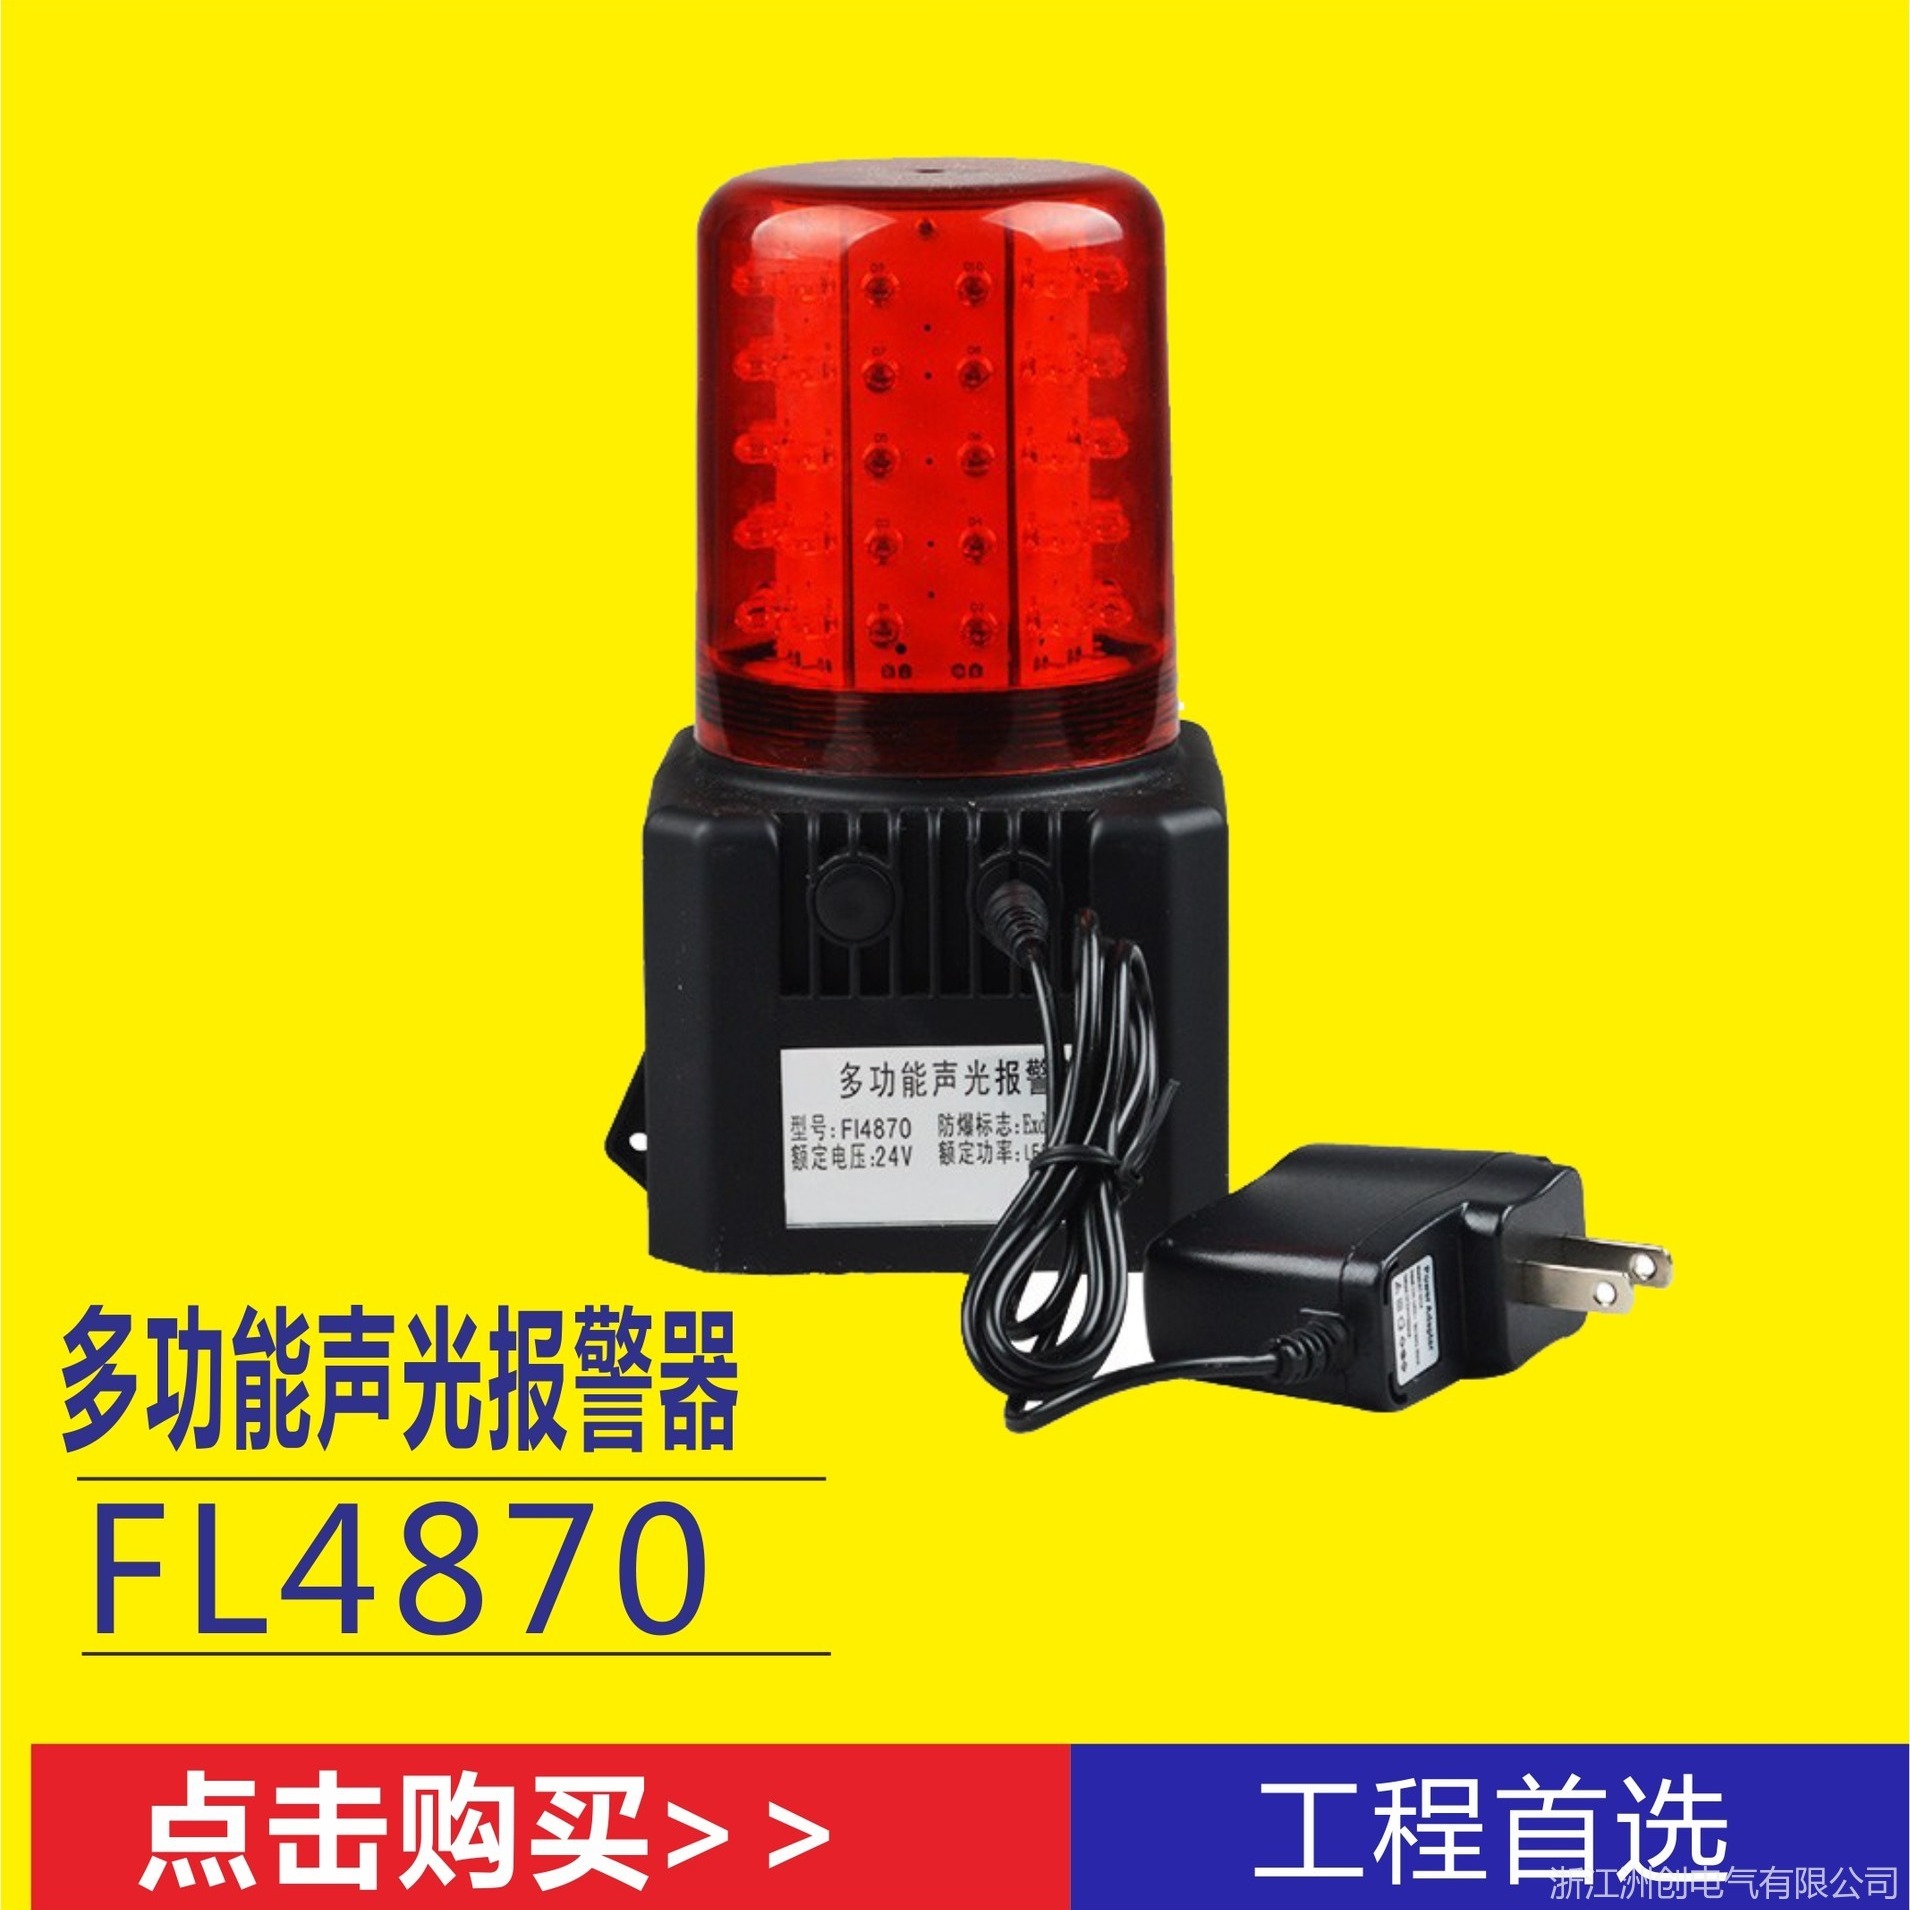 GMD4700声光报警灯 GMD4700蜂鸣式红闪报警器 充电式声光报警器